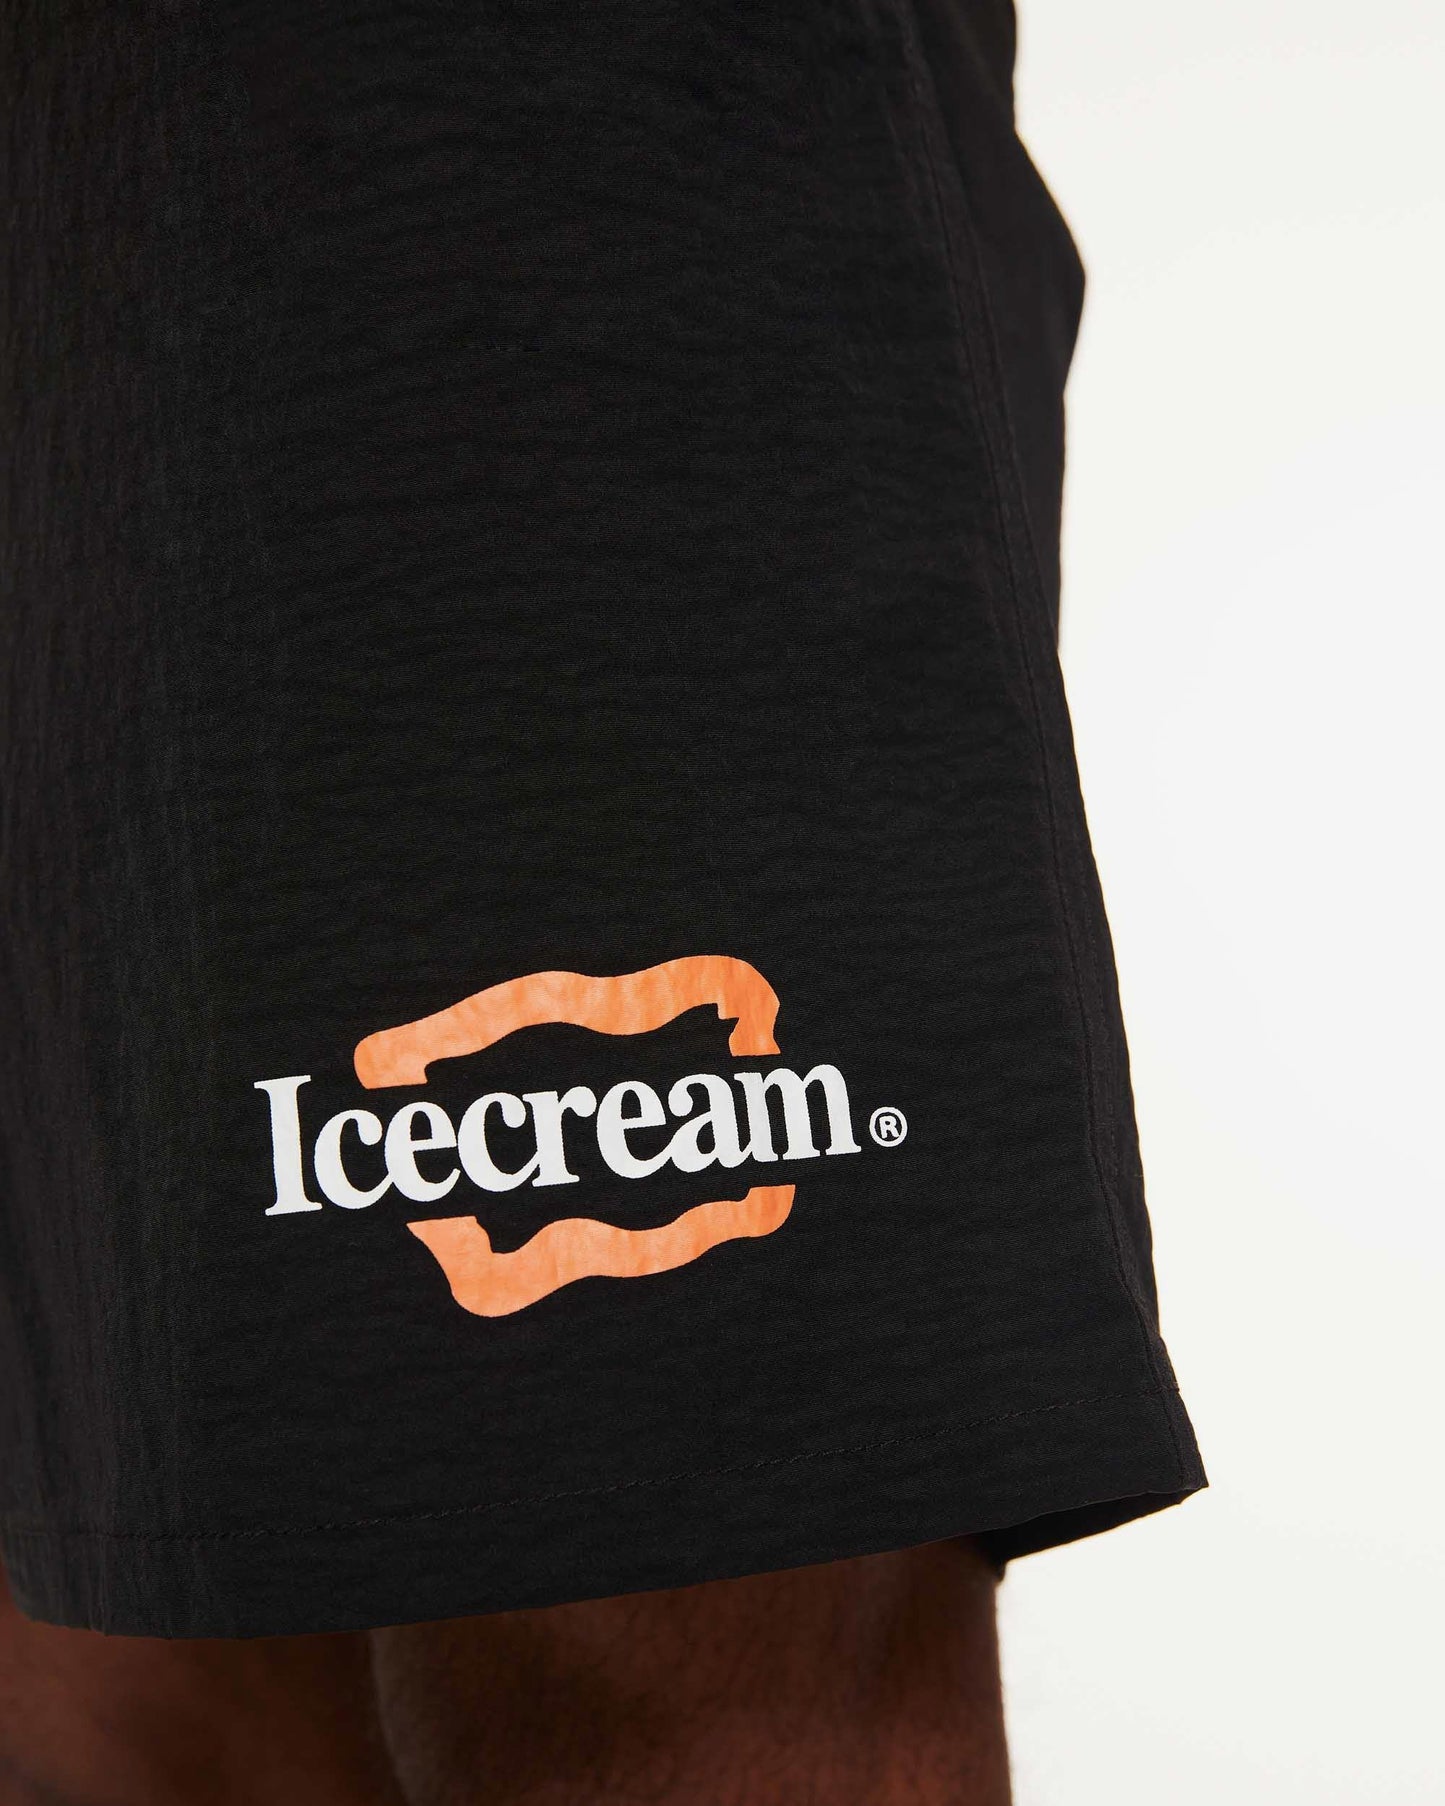 Trademark Shorts - Icecream